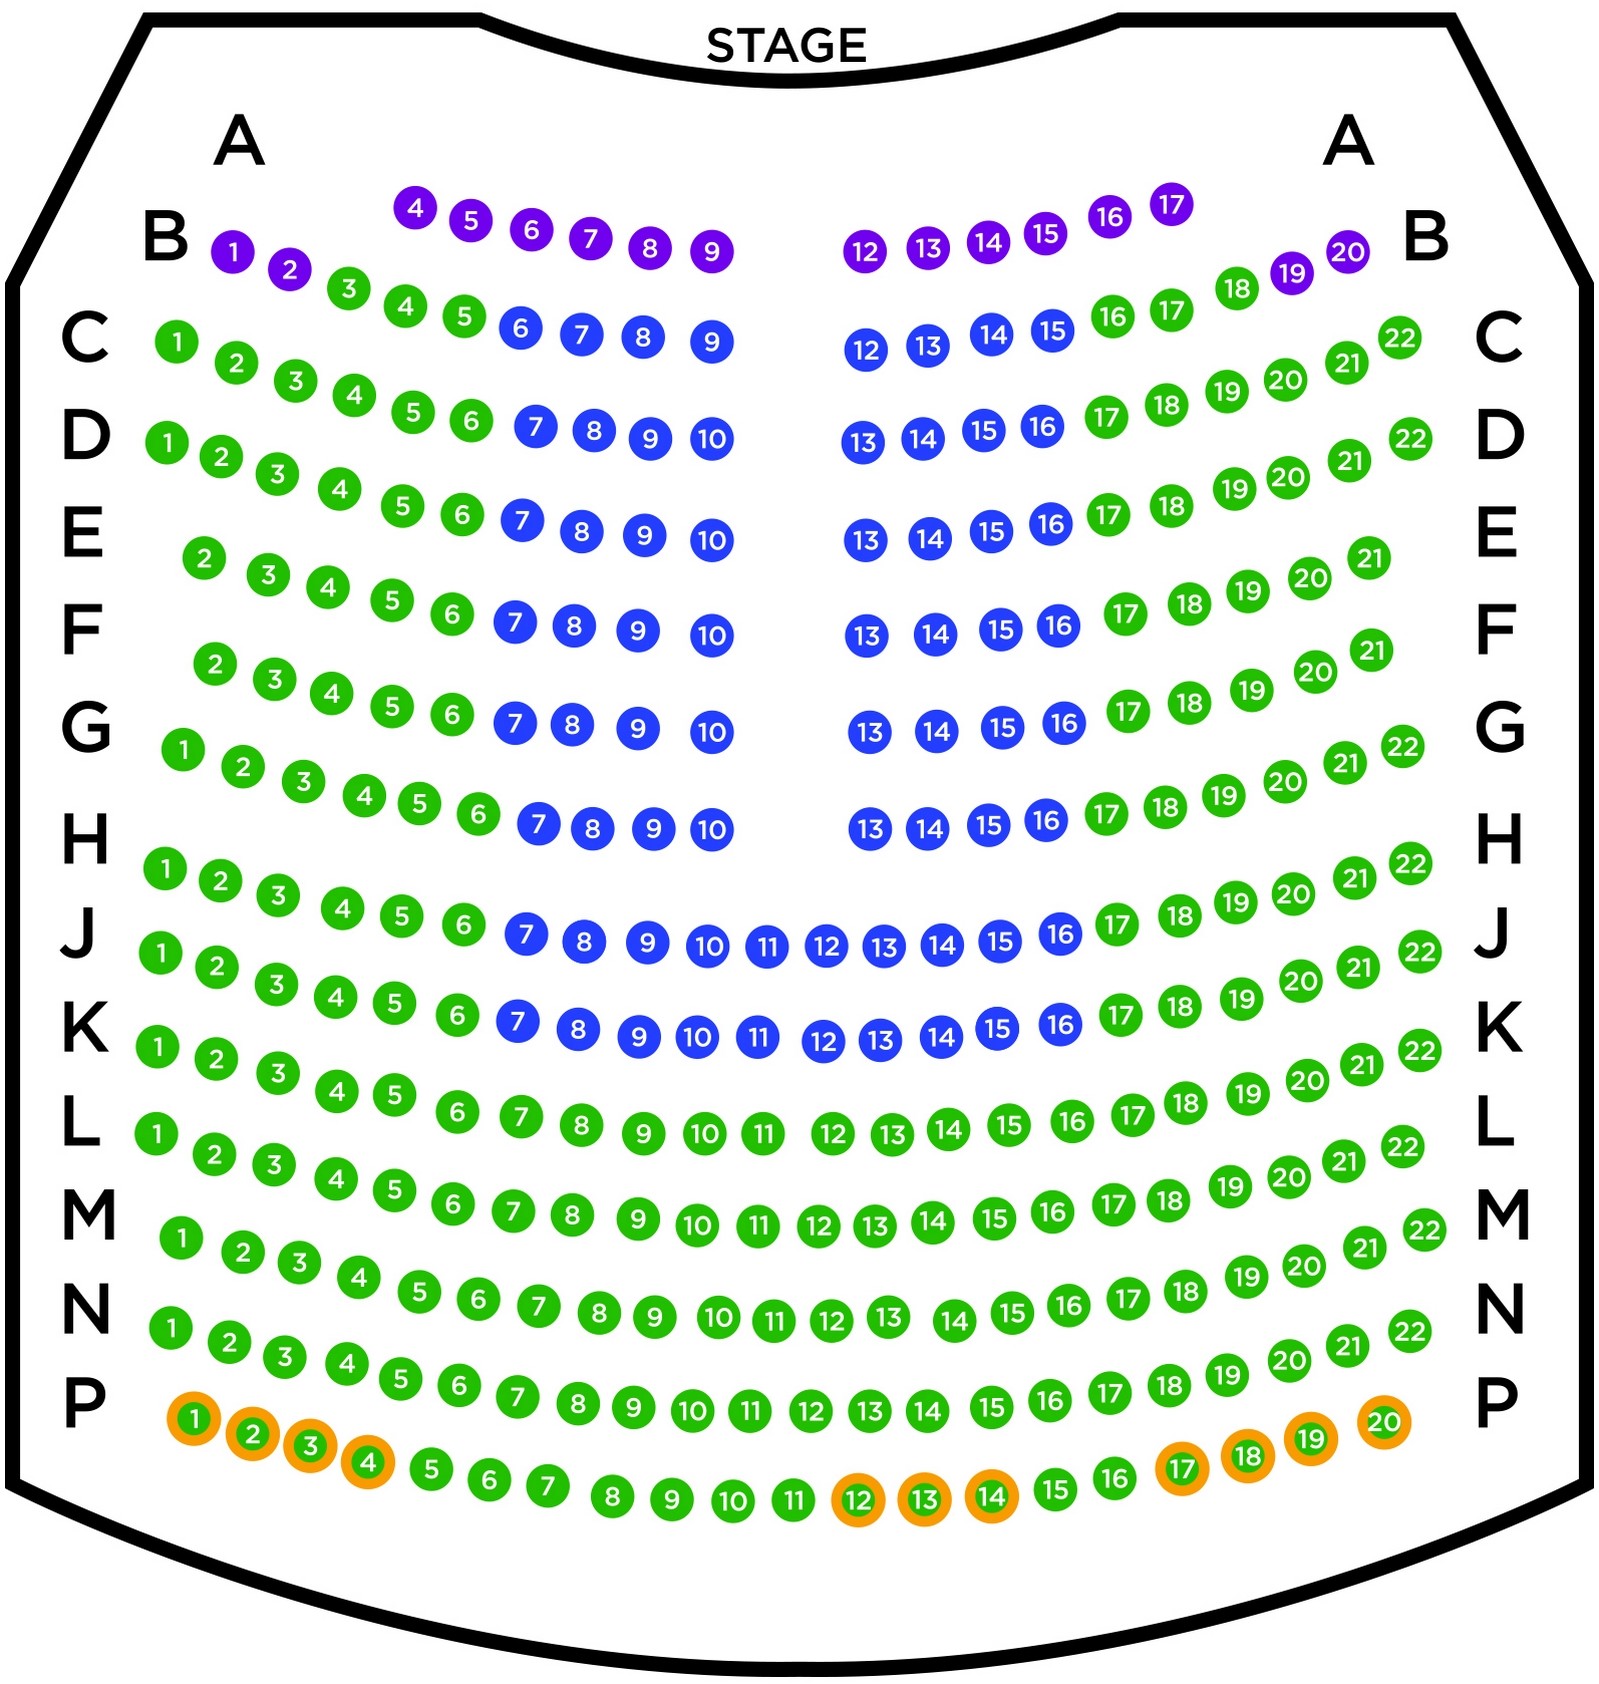 Casino nb seating chart oakland coliseum